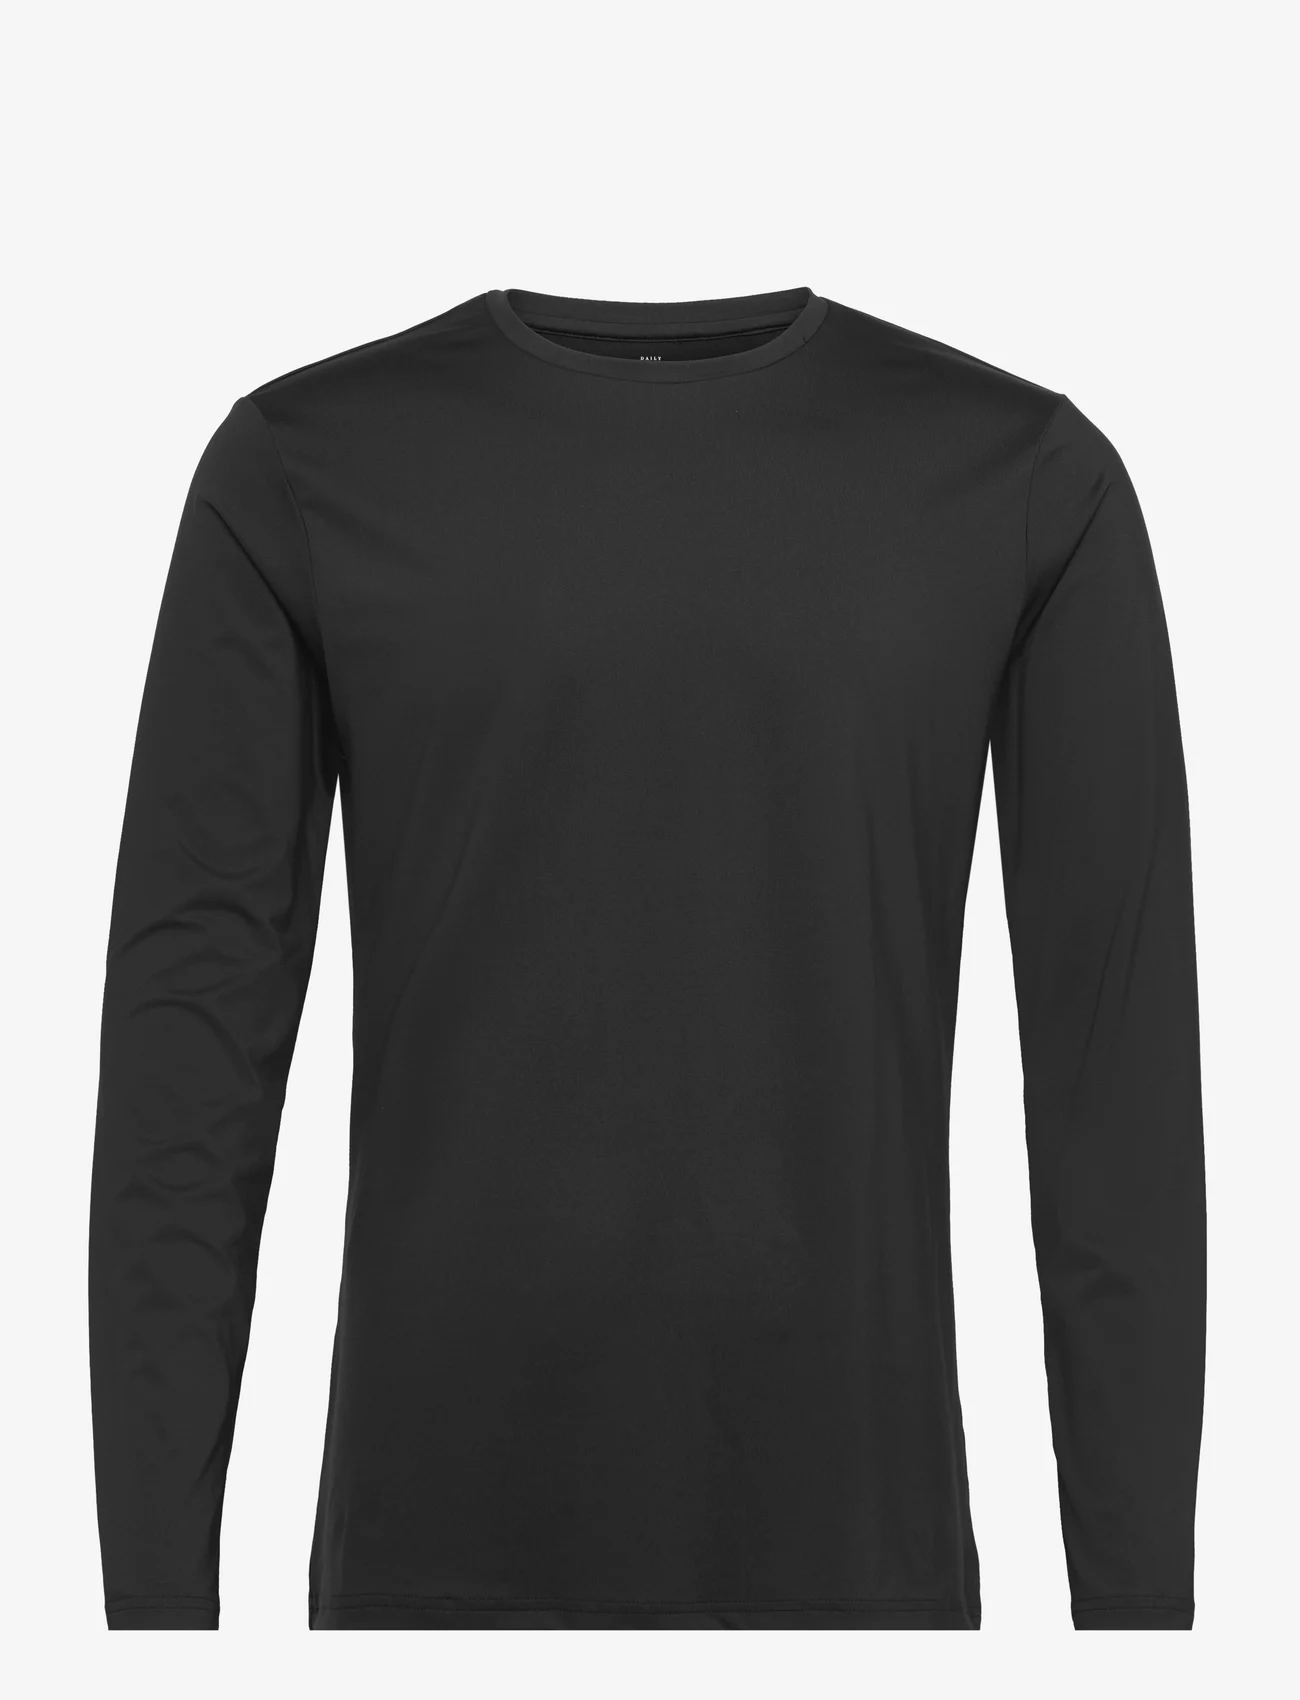 Bread & Boxers - Long Sleeve Active - basic t-shirts - black - 0